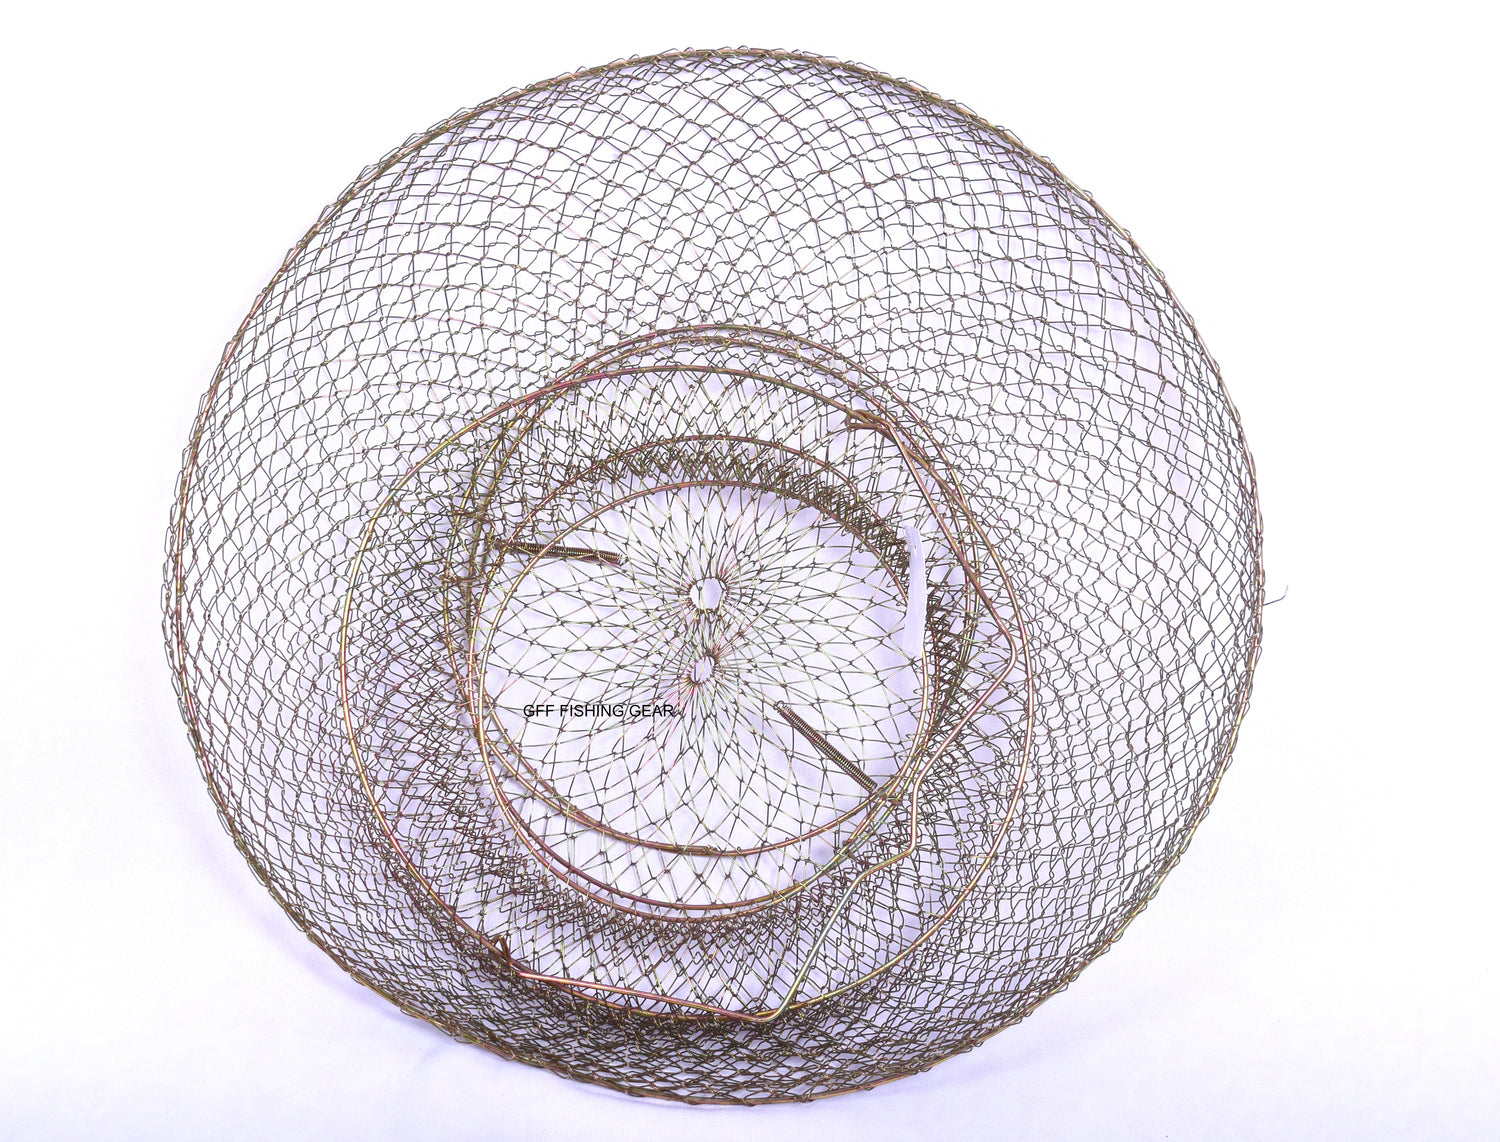 Collapsible Fish Basket – GFF FISHING GEAR